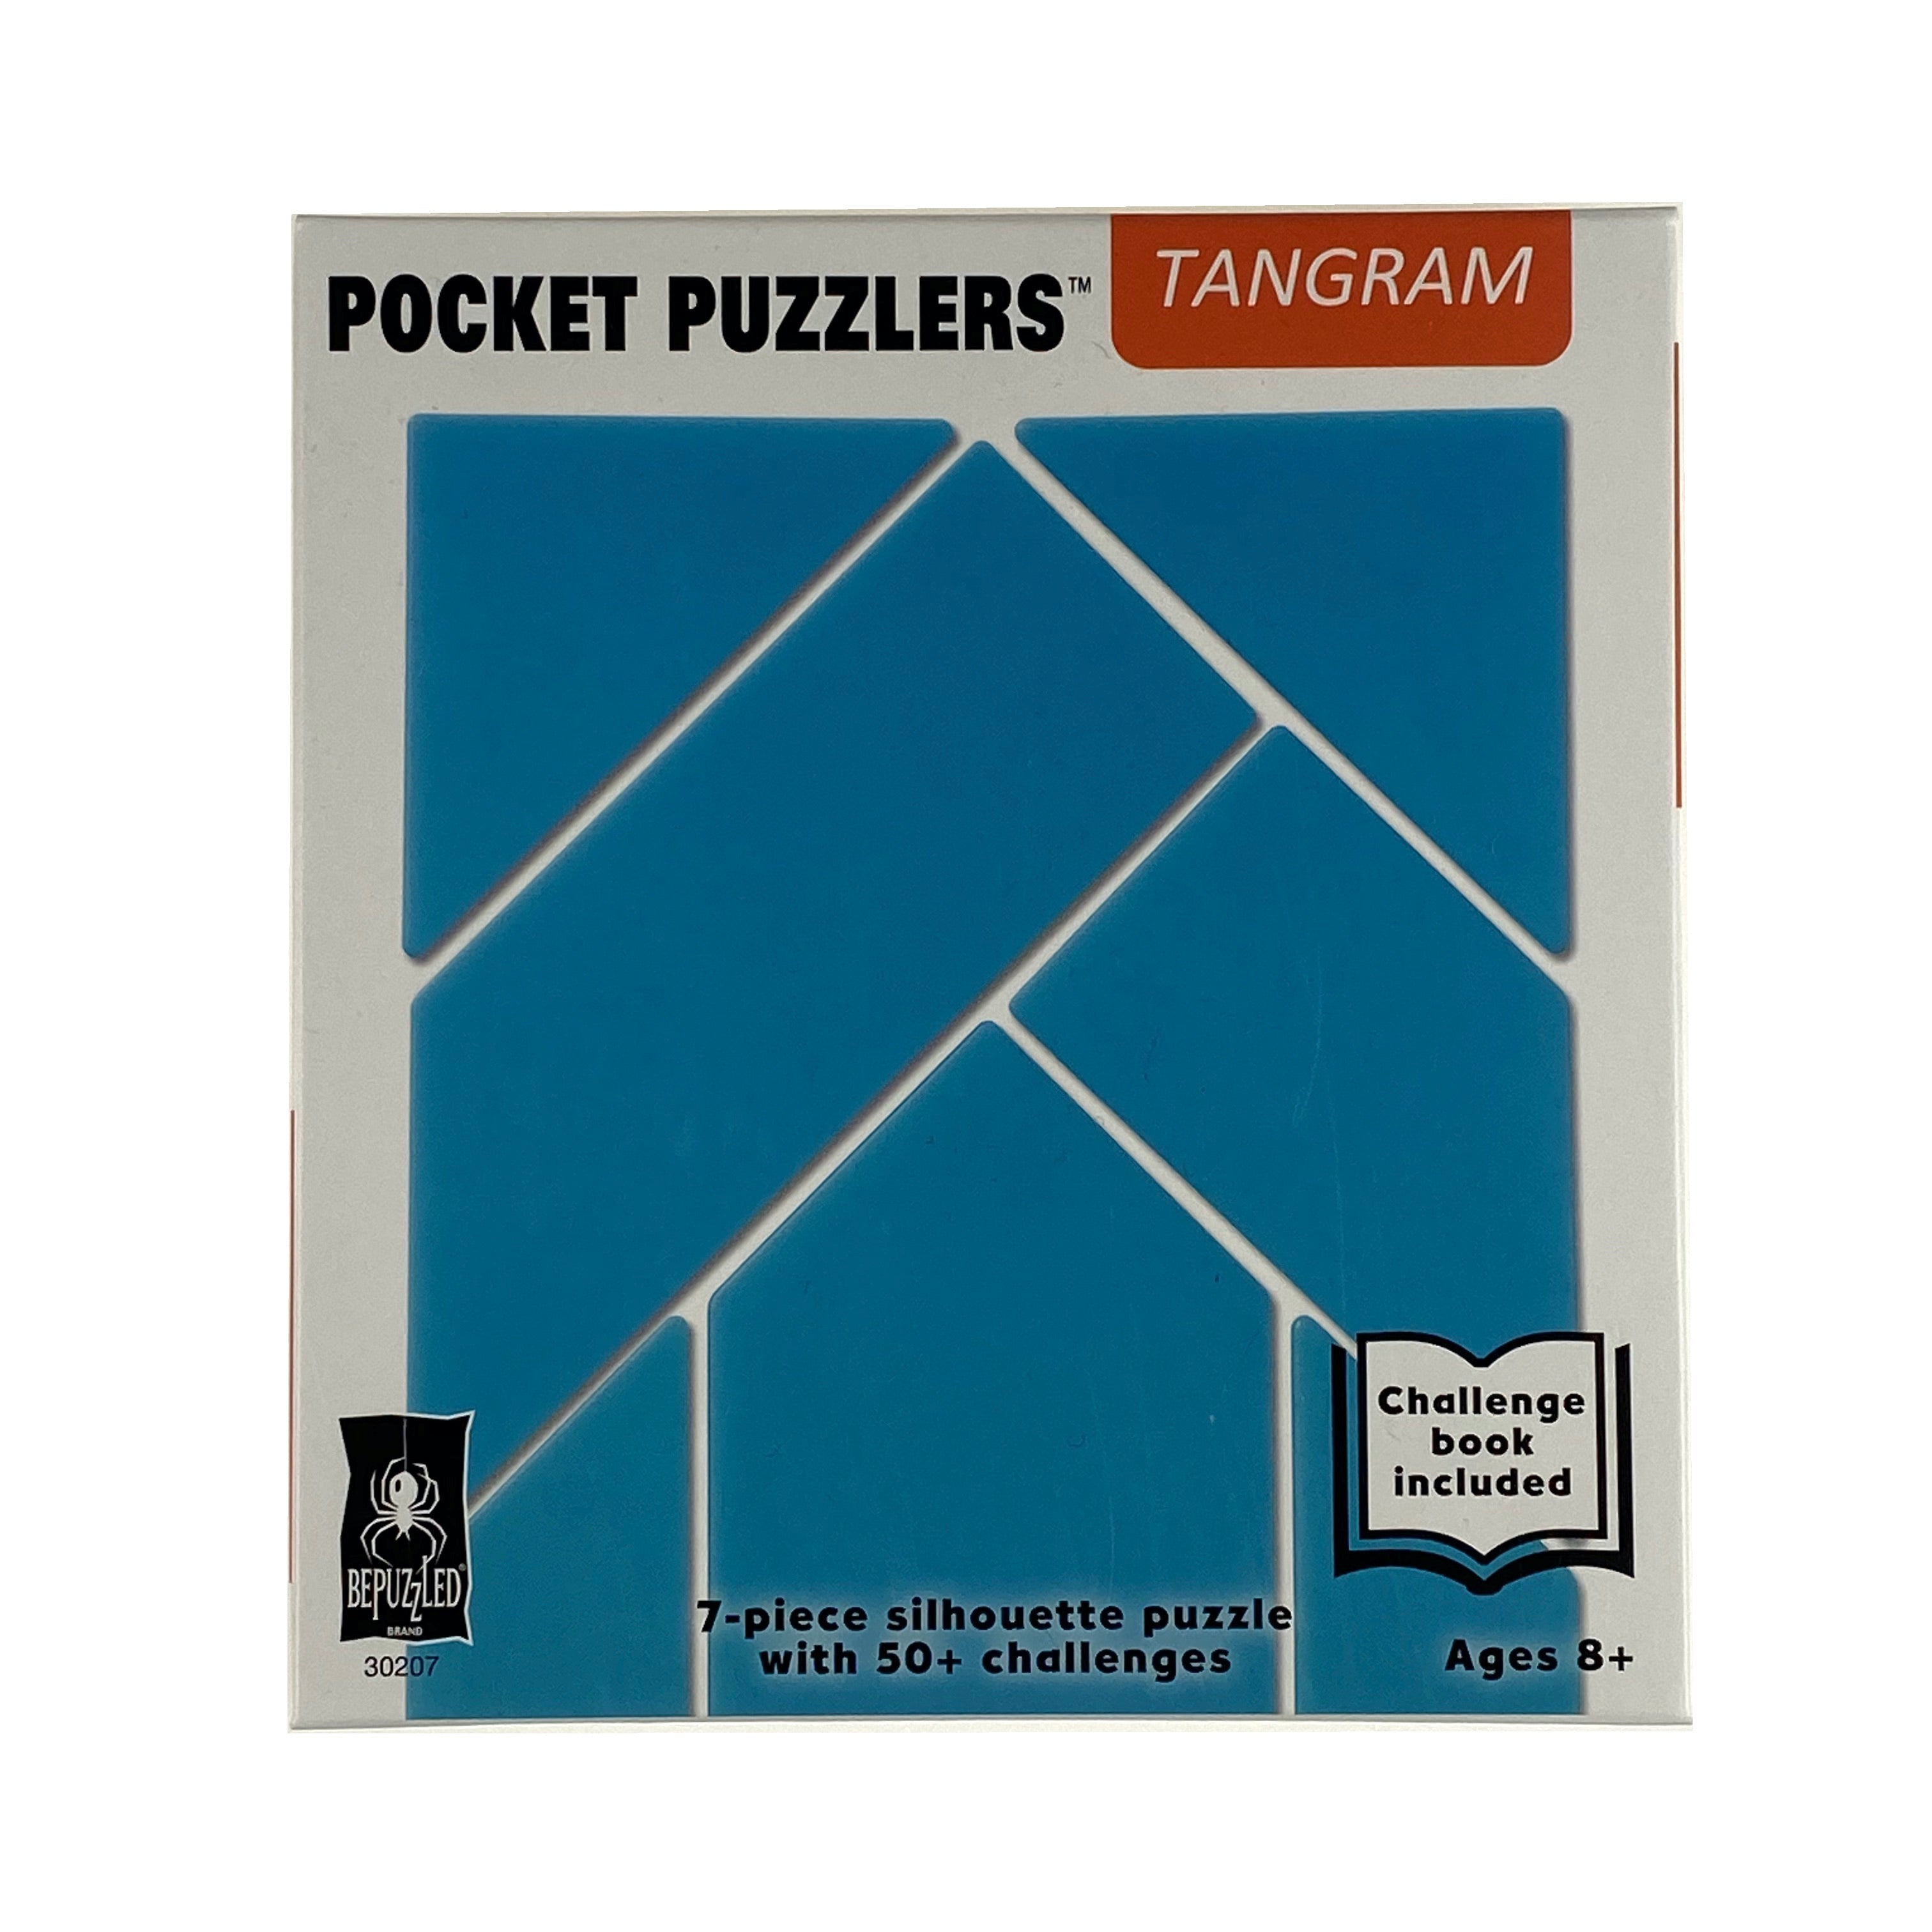 Pocket Puzzlers Tangram    